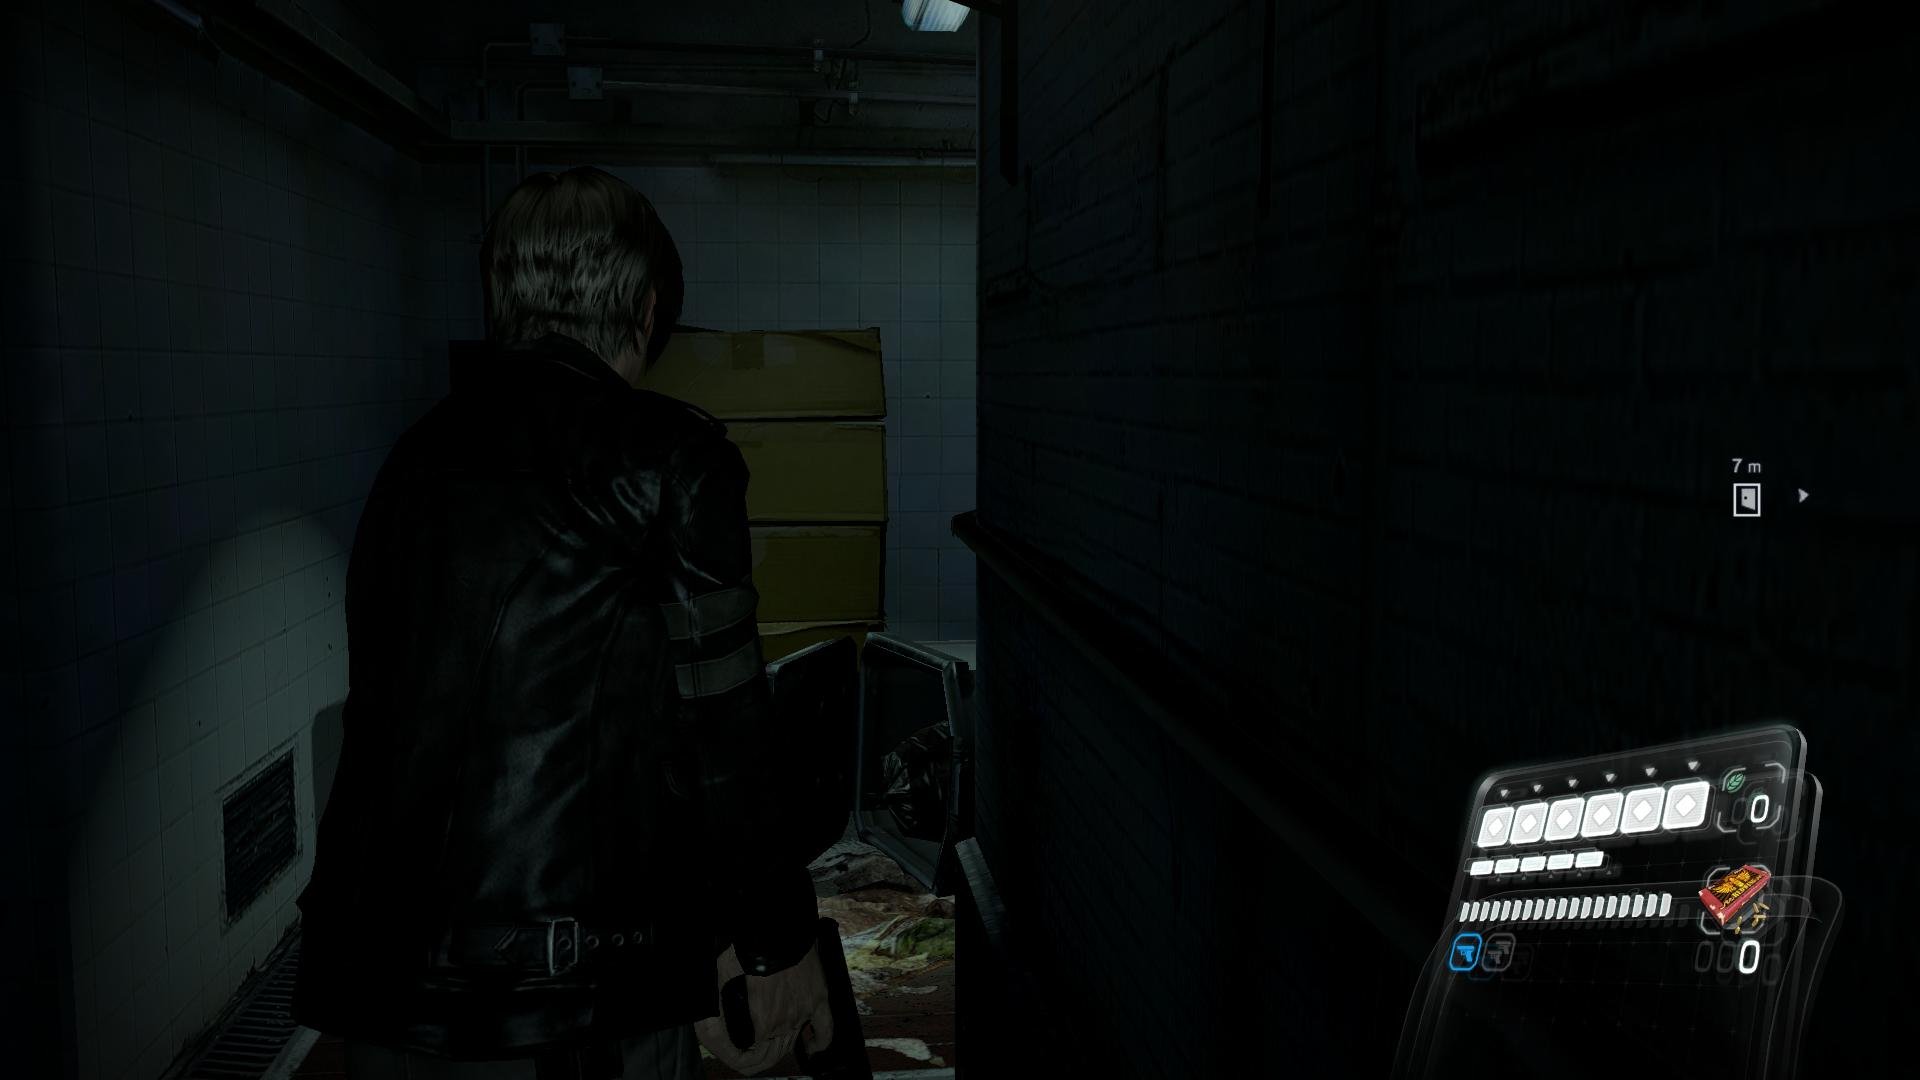 Скриншот 2 к игре Resident Evil 6 [v 1.1.0 build 10112070 + DLCs] (2013) RePack от Decepticon